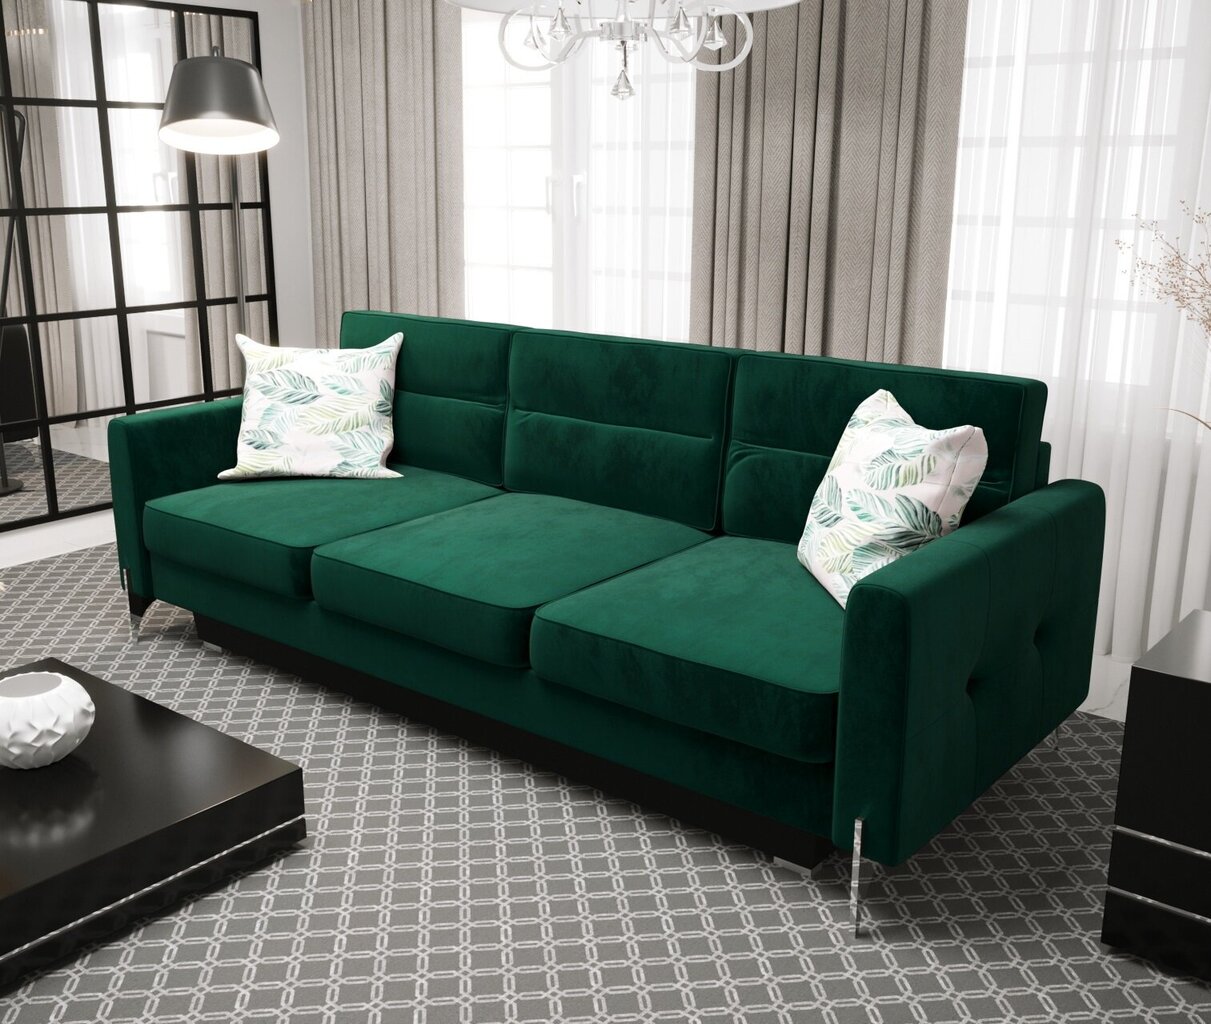 Trivietė sofa - lova ARTIS DL, žalia kaina ir informacija | Sofos | pigu.lt